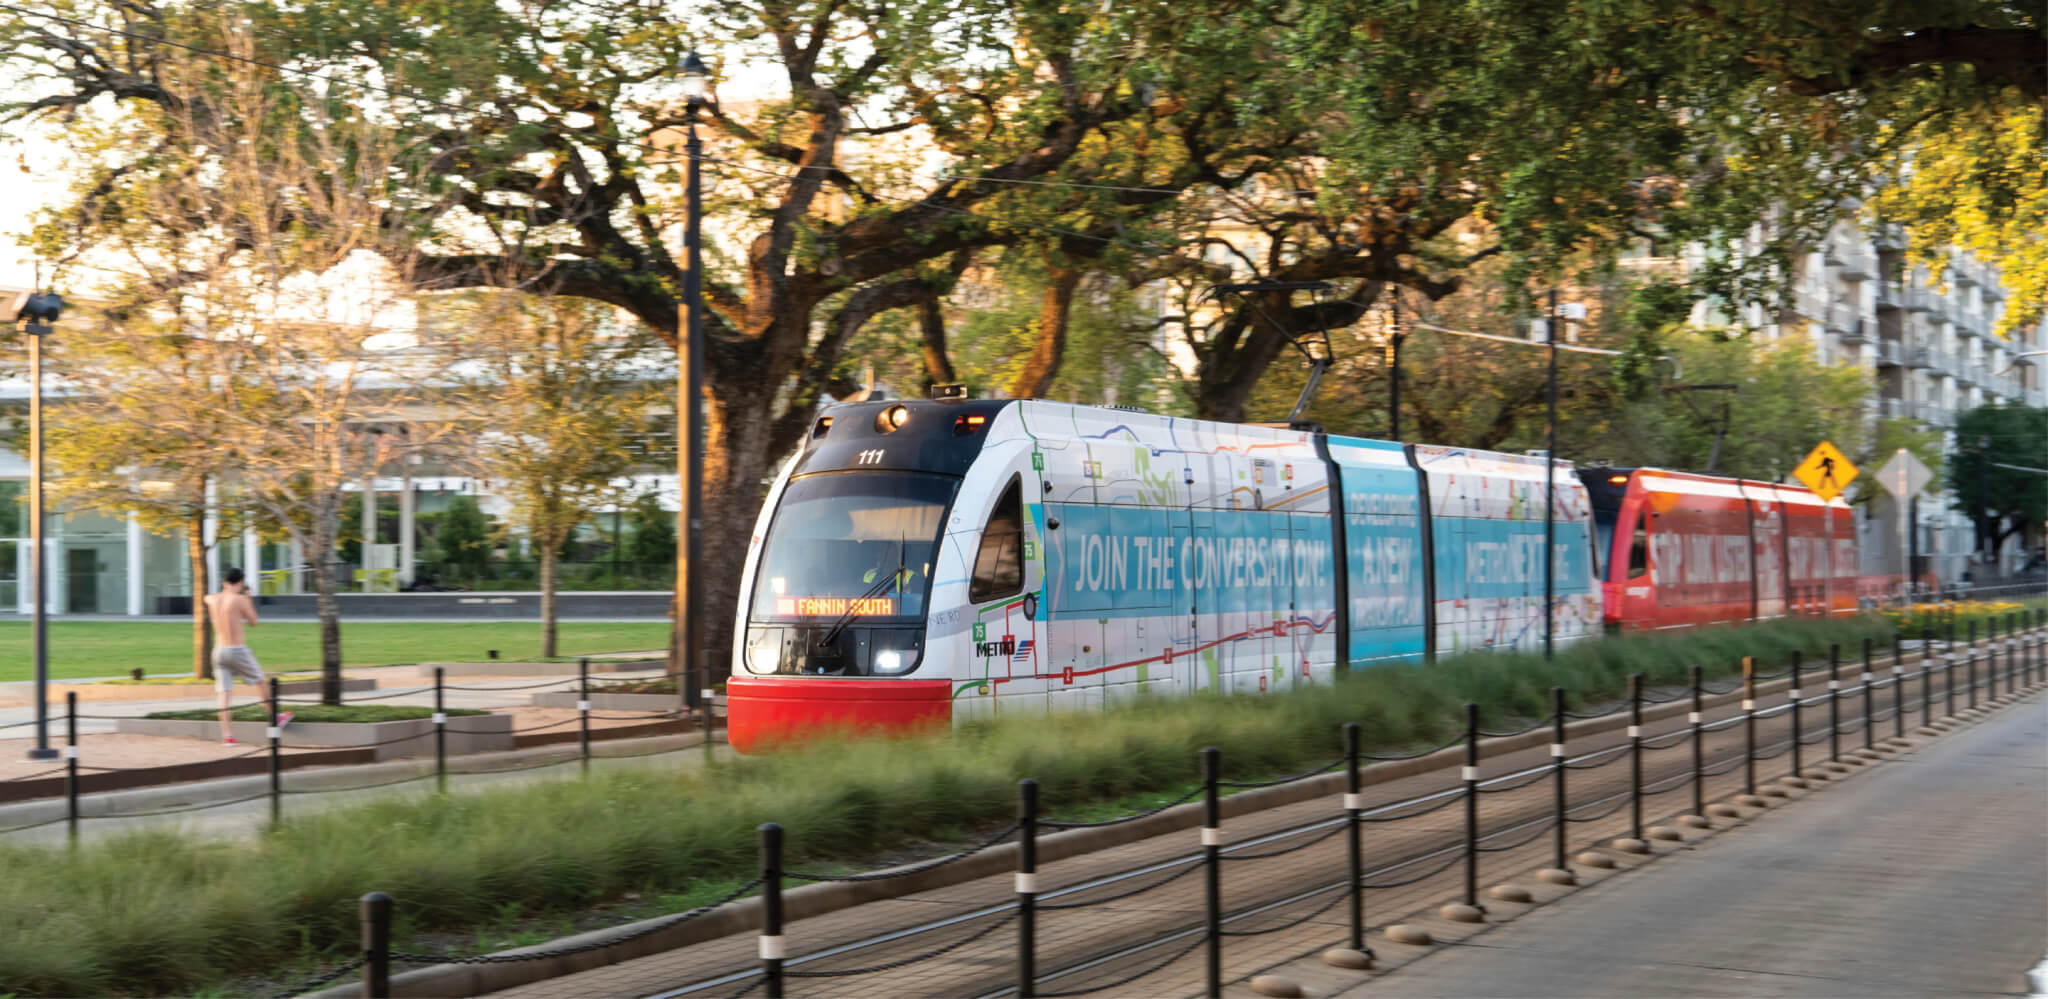 a street tram moves through a park-like landscape